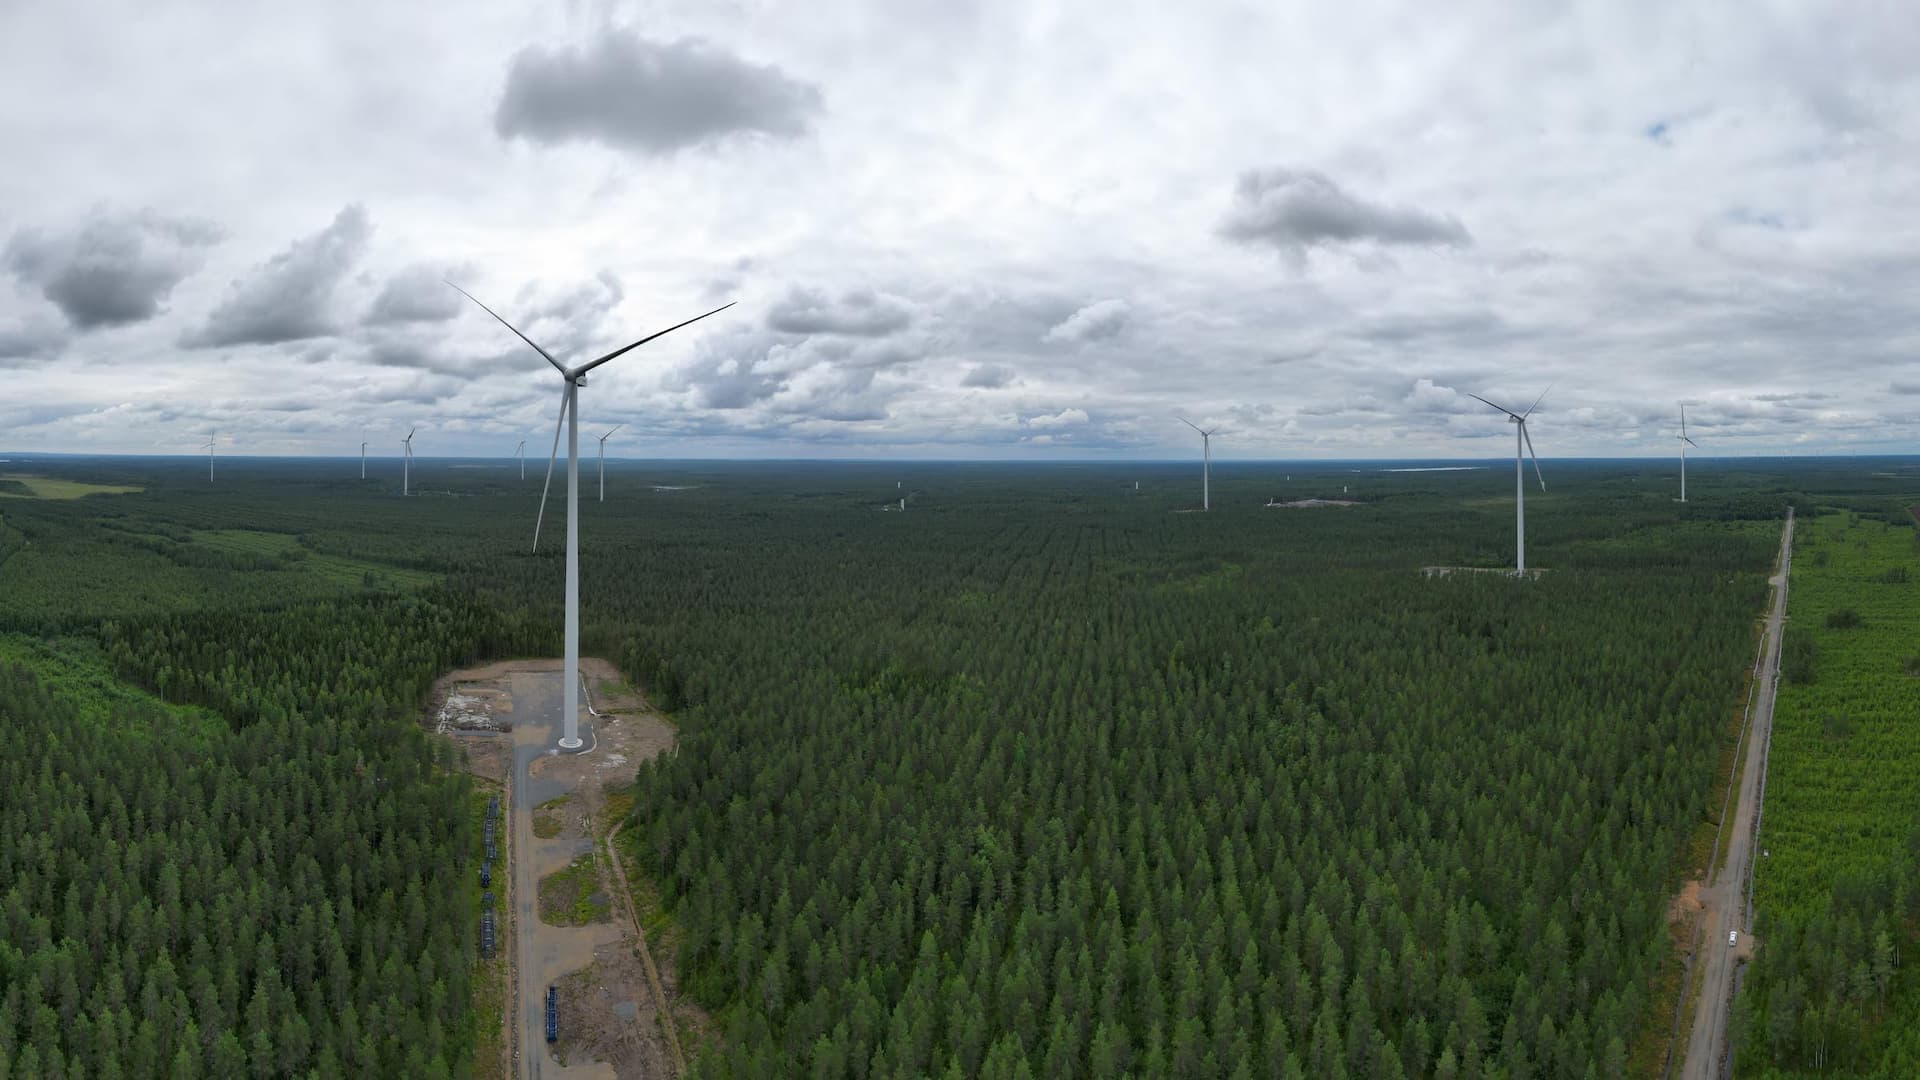 Wind power in Finland